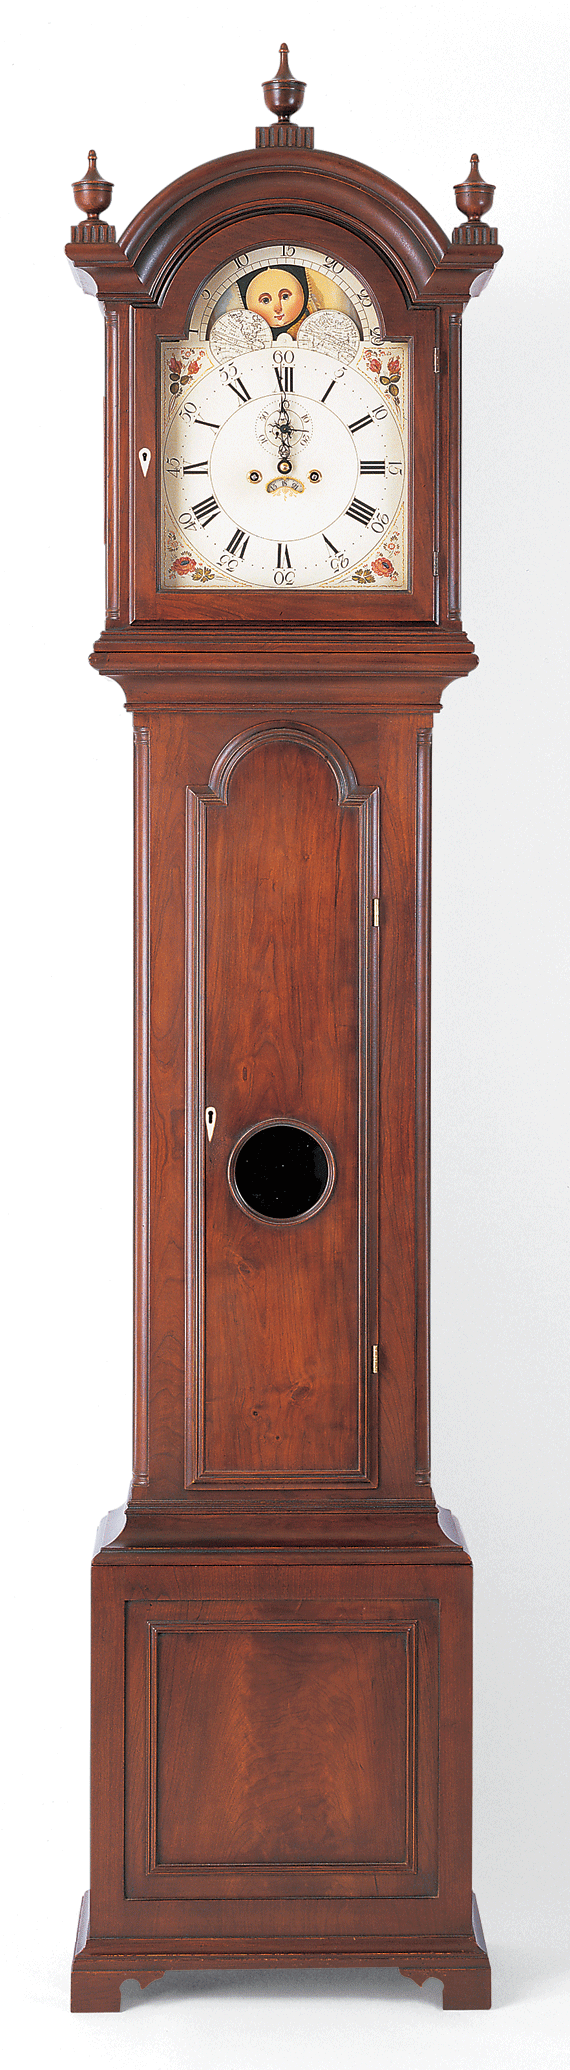 Copy of a Johann Eberhardt, Salem, North Carolina Tall clock